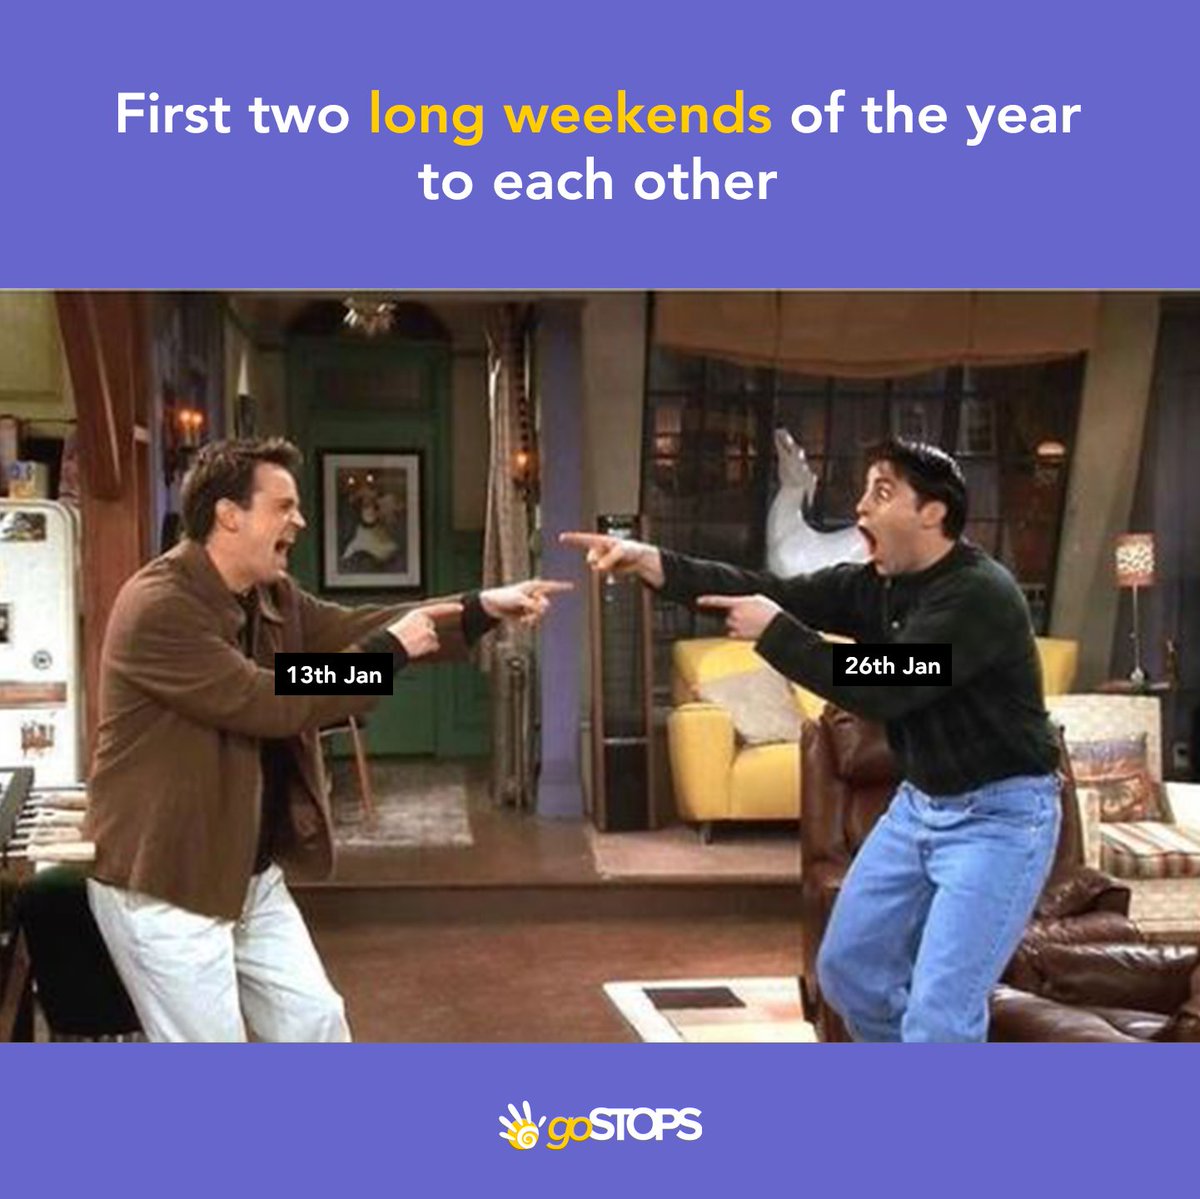 Double the long weekend, double the fun 🍻

#friendsmemes #friends #chandlerbing #joeytribbiani #rossgeller #friendstvshow #rachelgreen #memes #friendstv #friendsreunion #centralperk #funnymemes #friendsedit #goSTOPS #goMOREbeMORE